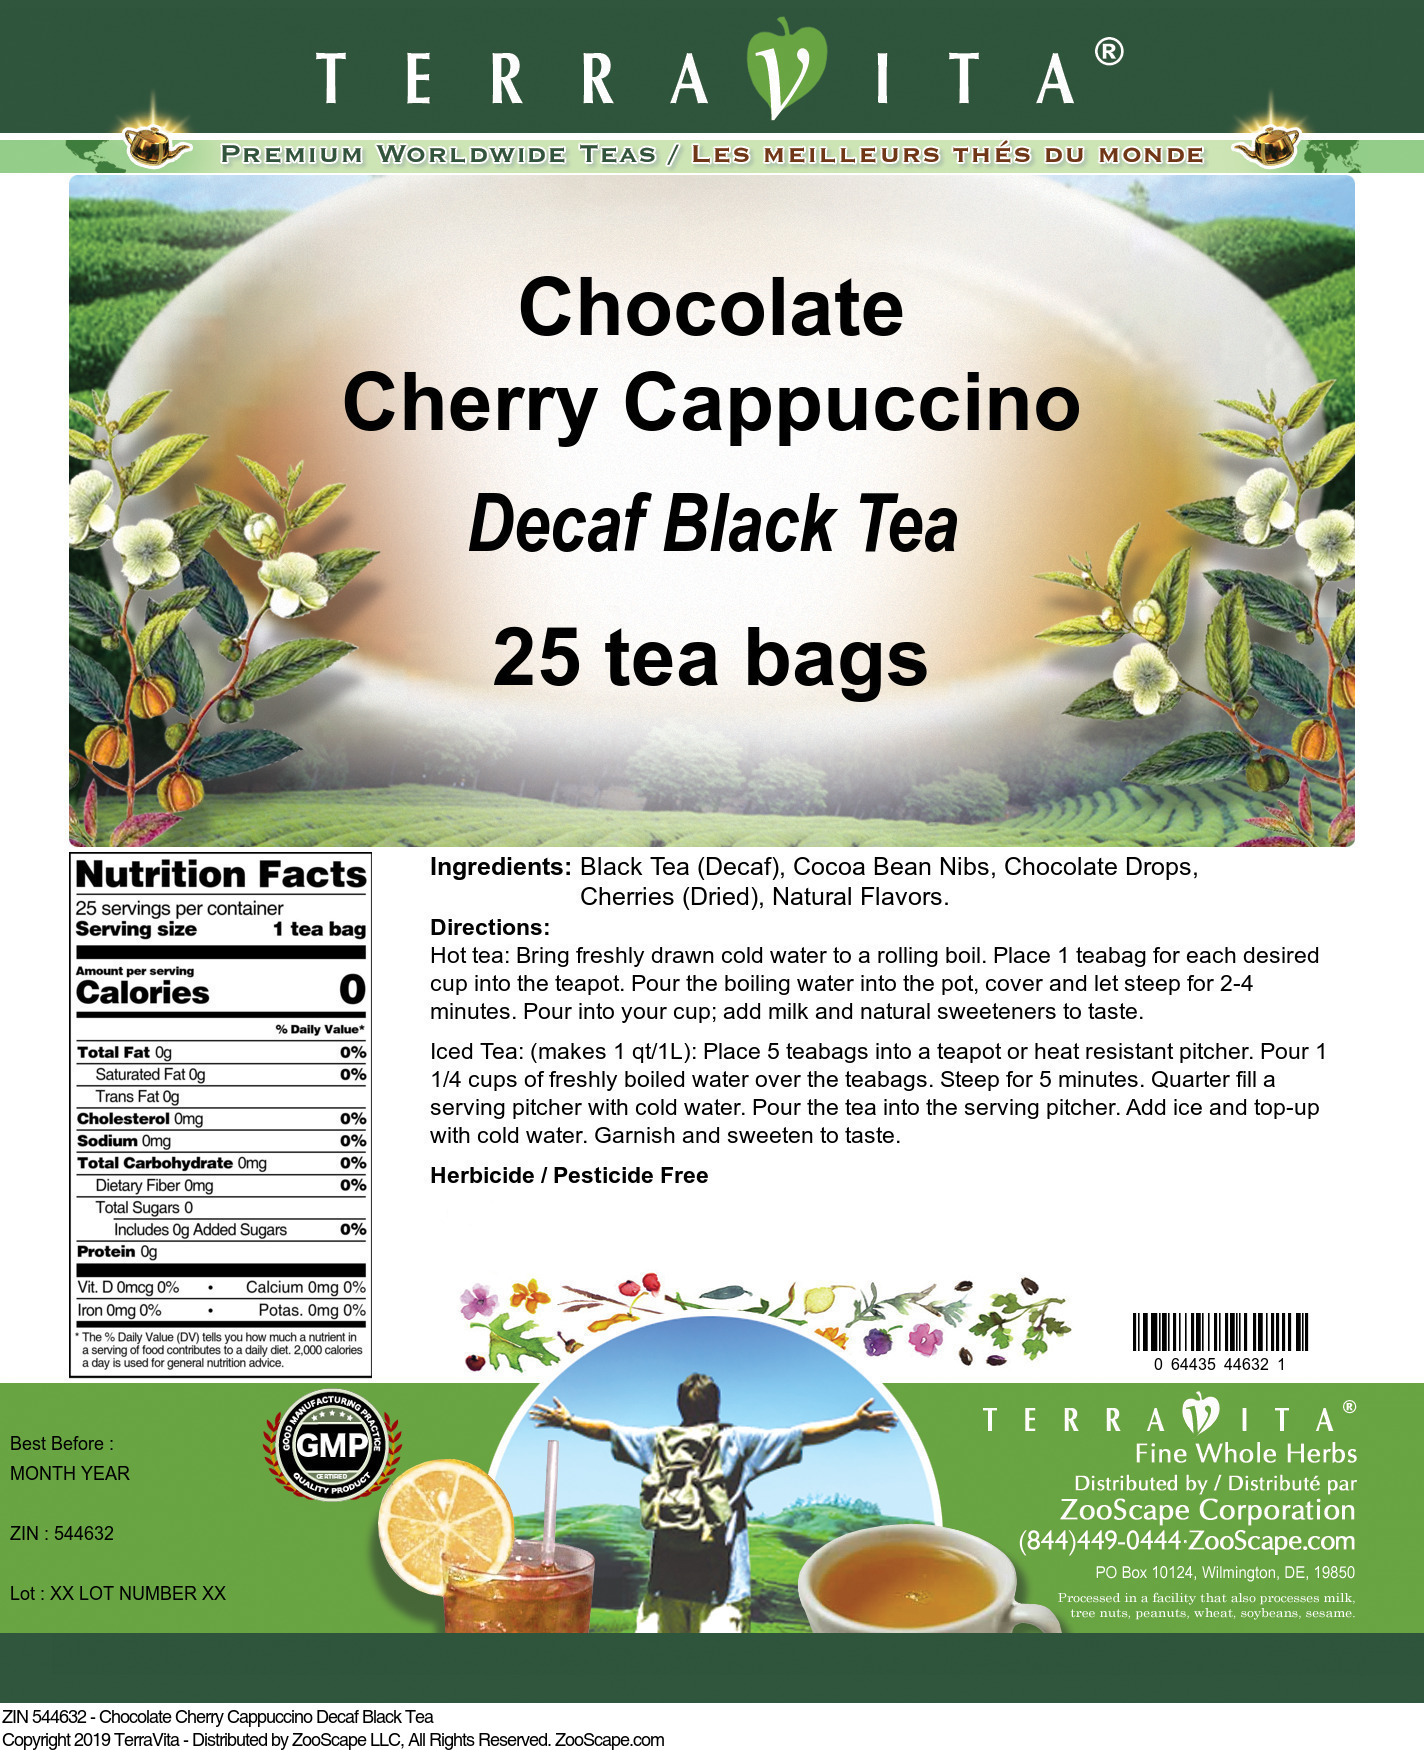 Chocolate Cherry Cappuccino Decaf Black Tea - Label